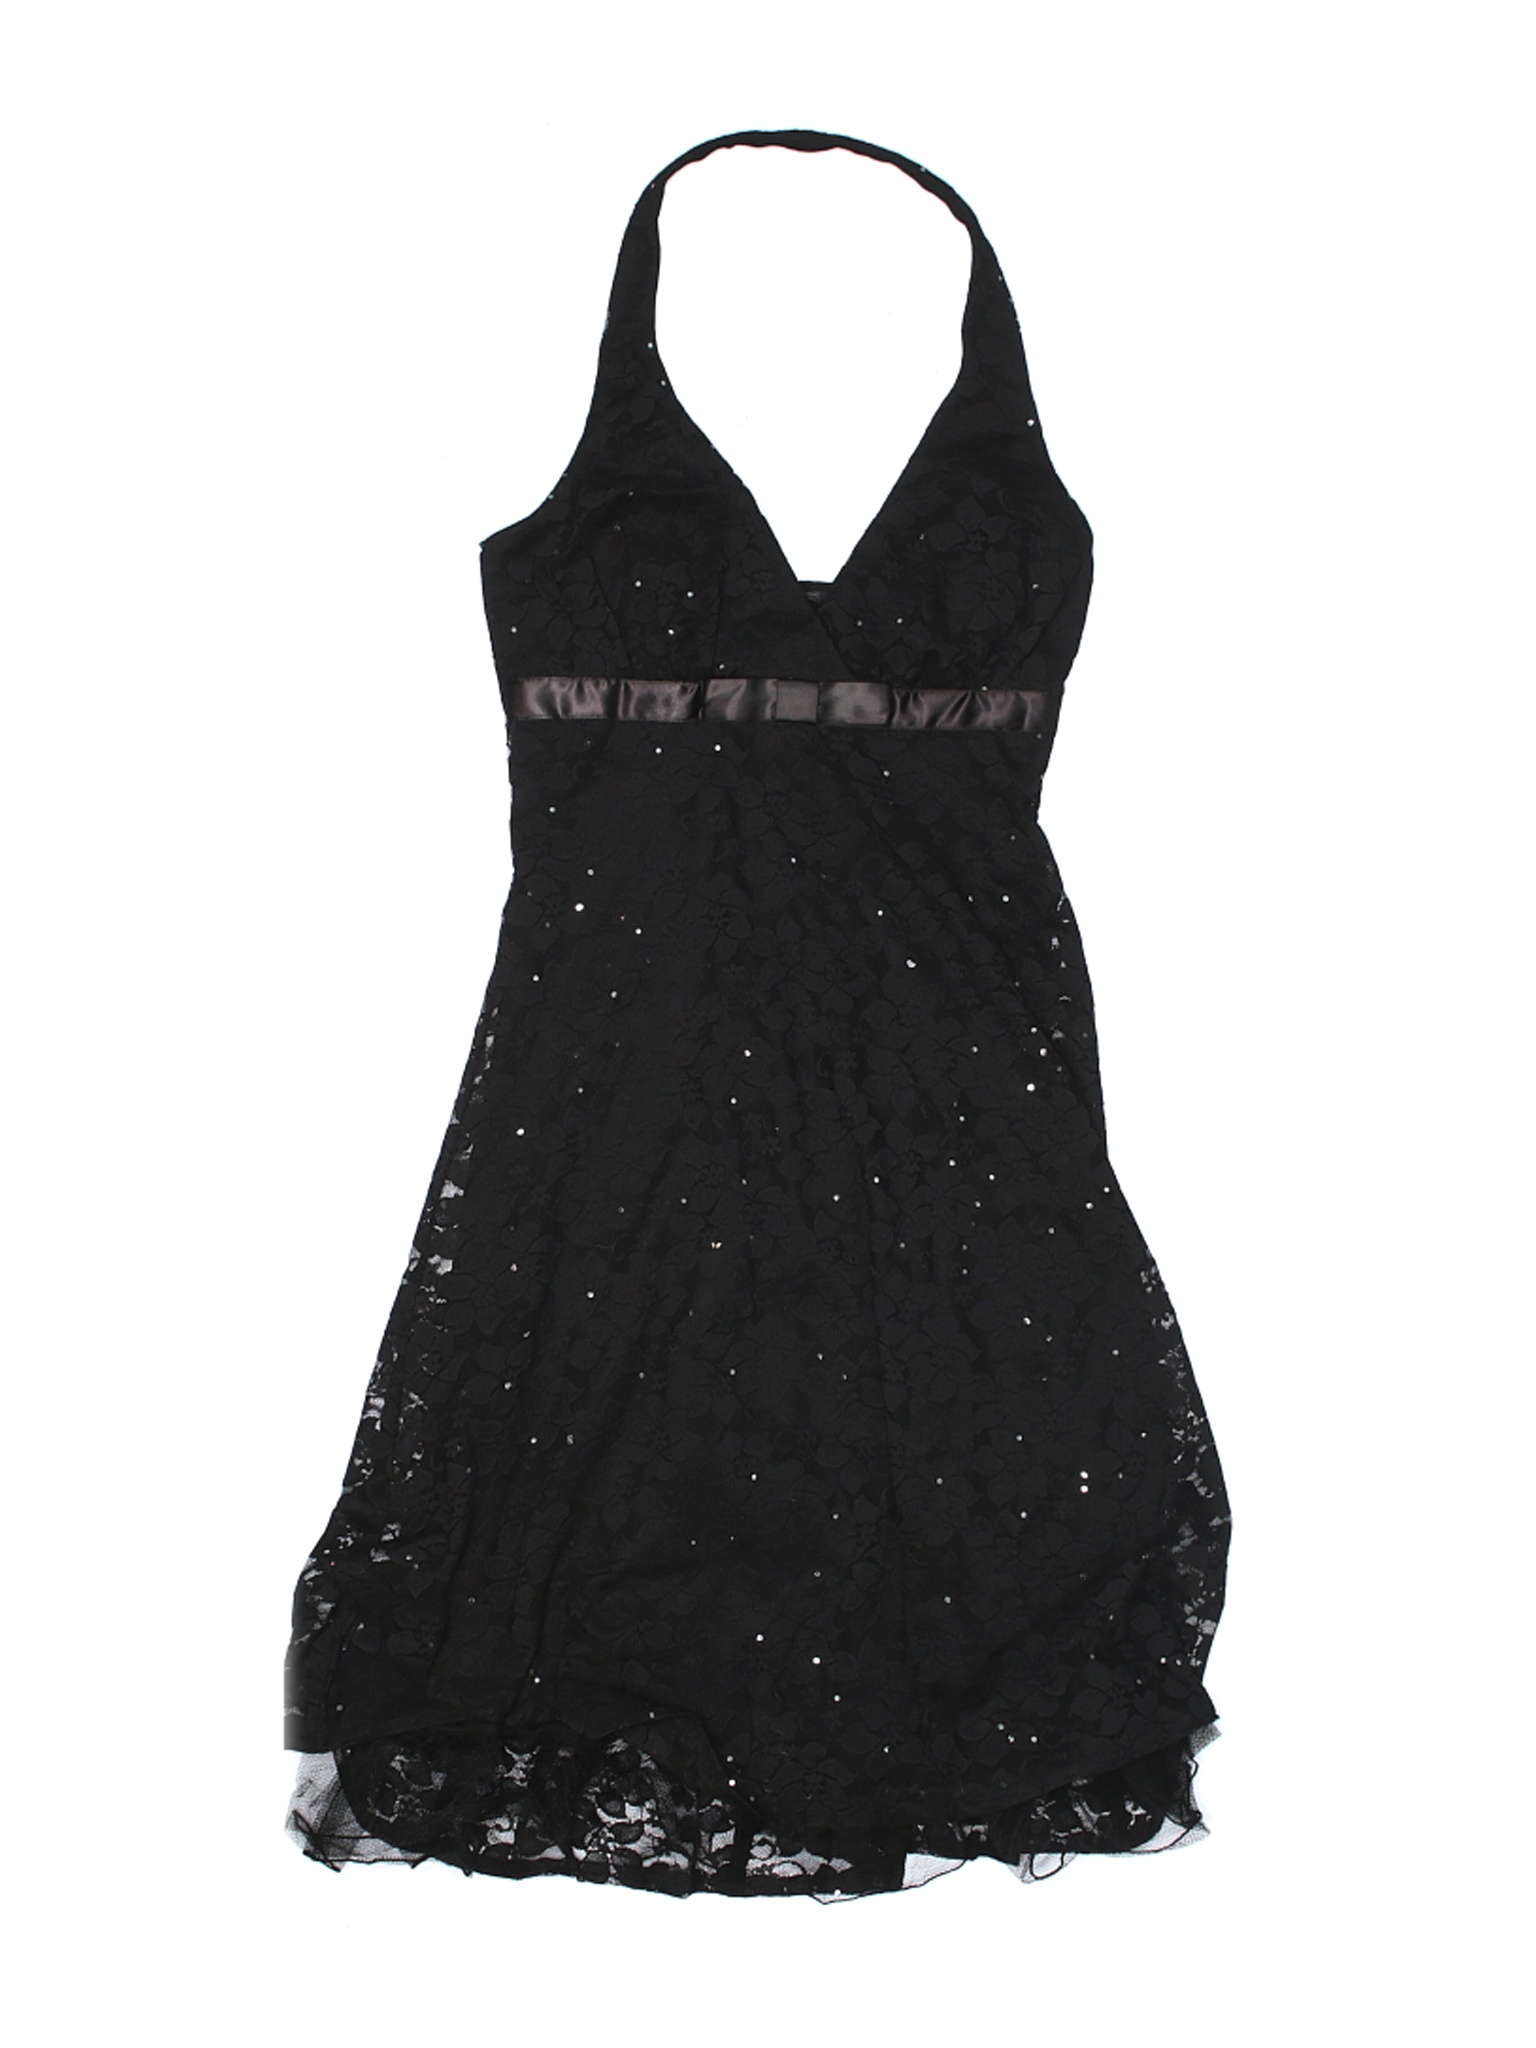 City Triangles Women Black Cocktail Dress S | eBay